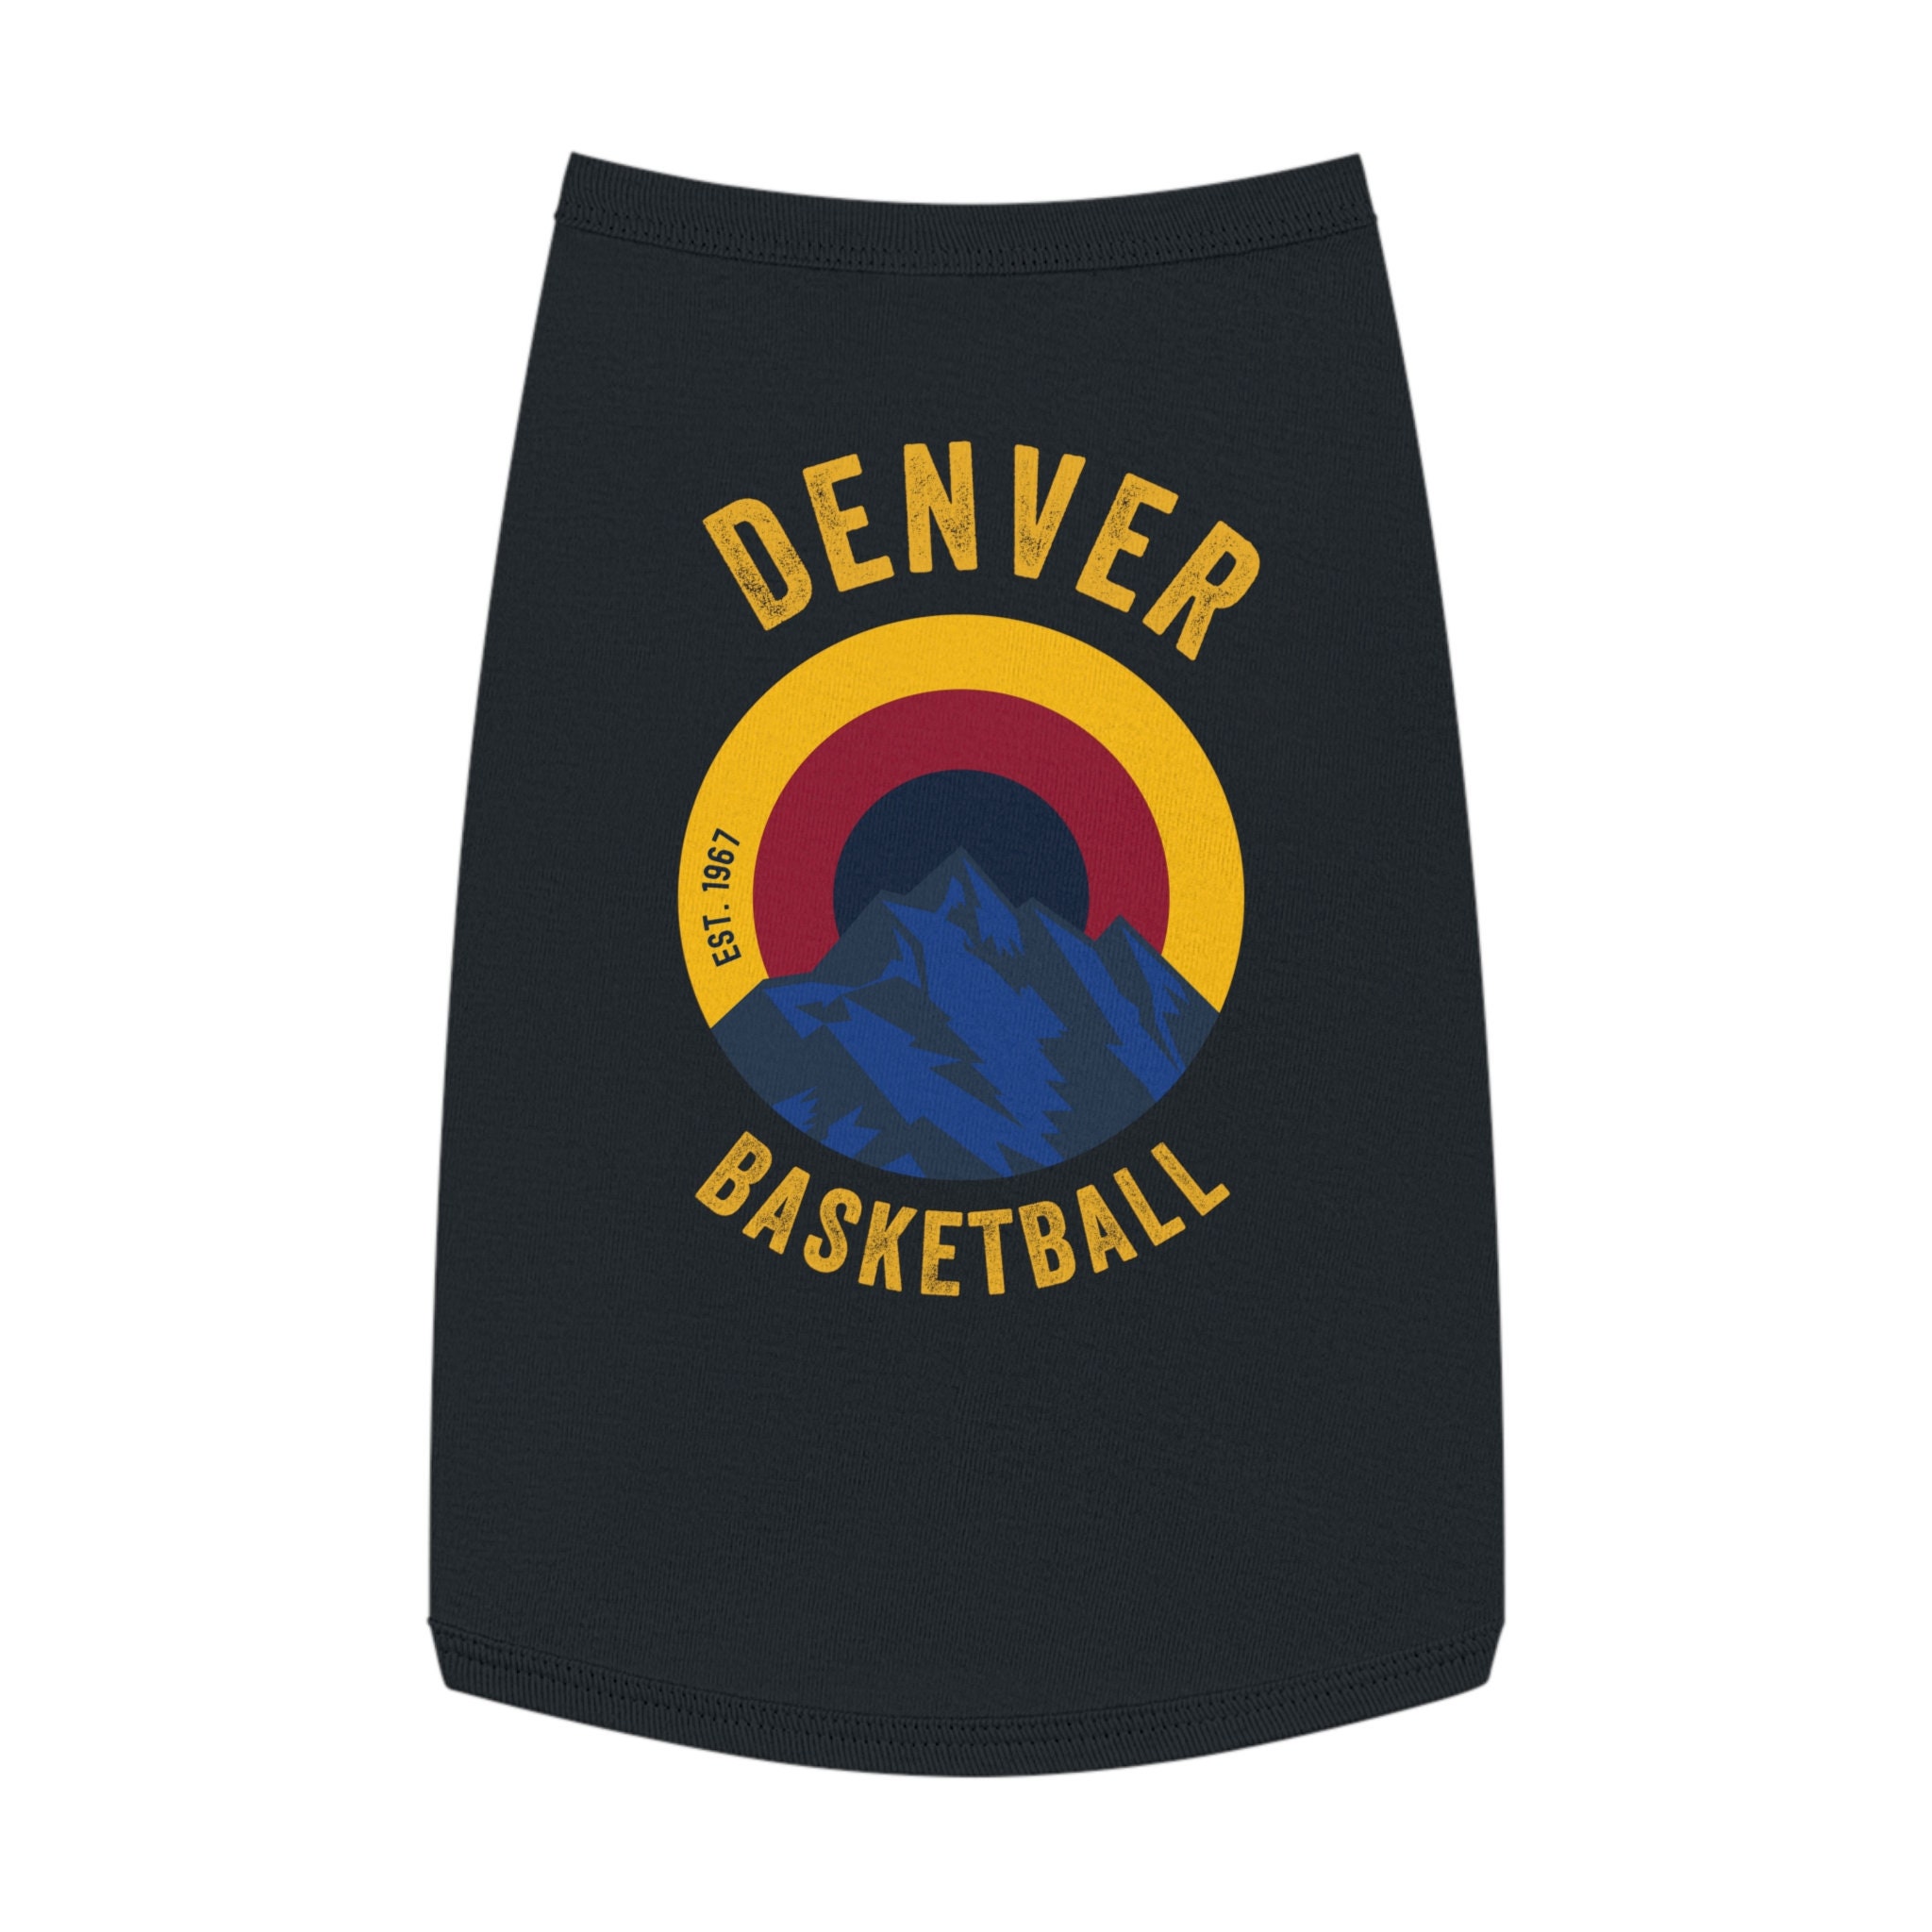 Denver Basketball Dog Shirt Mile High City Dog Pet Apparel 